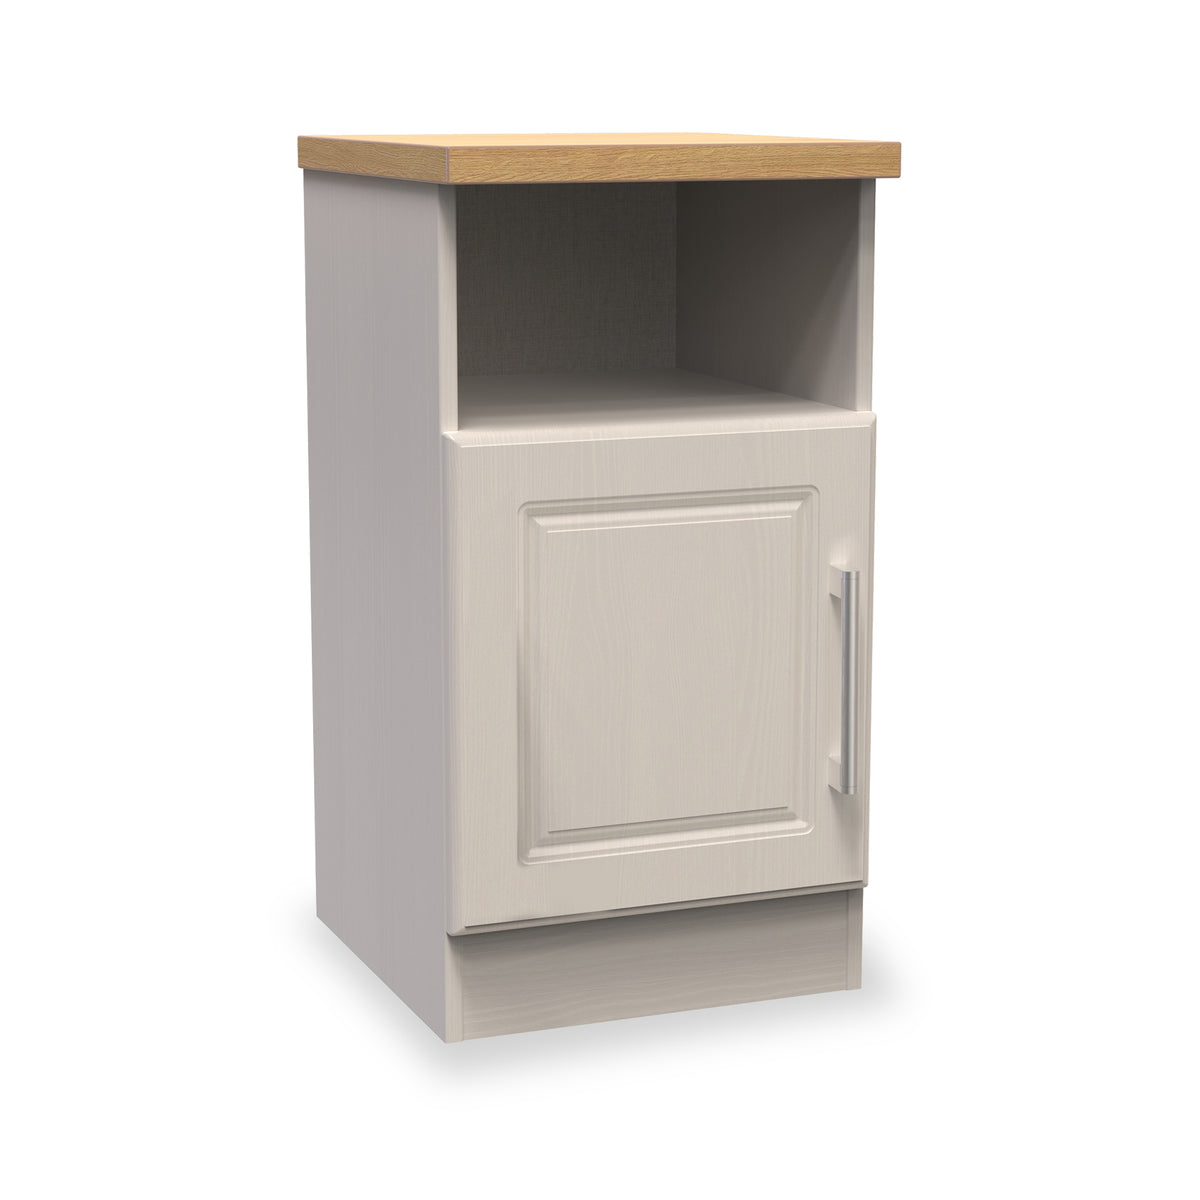 Talland Ash 1 Door Cabinet from Roseland Furniture